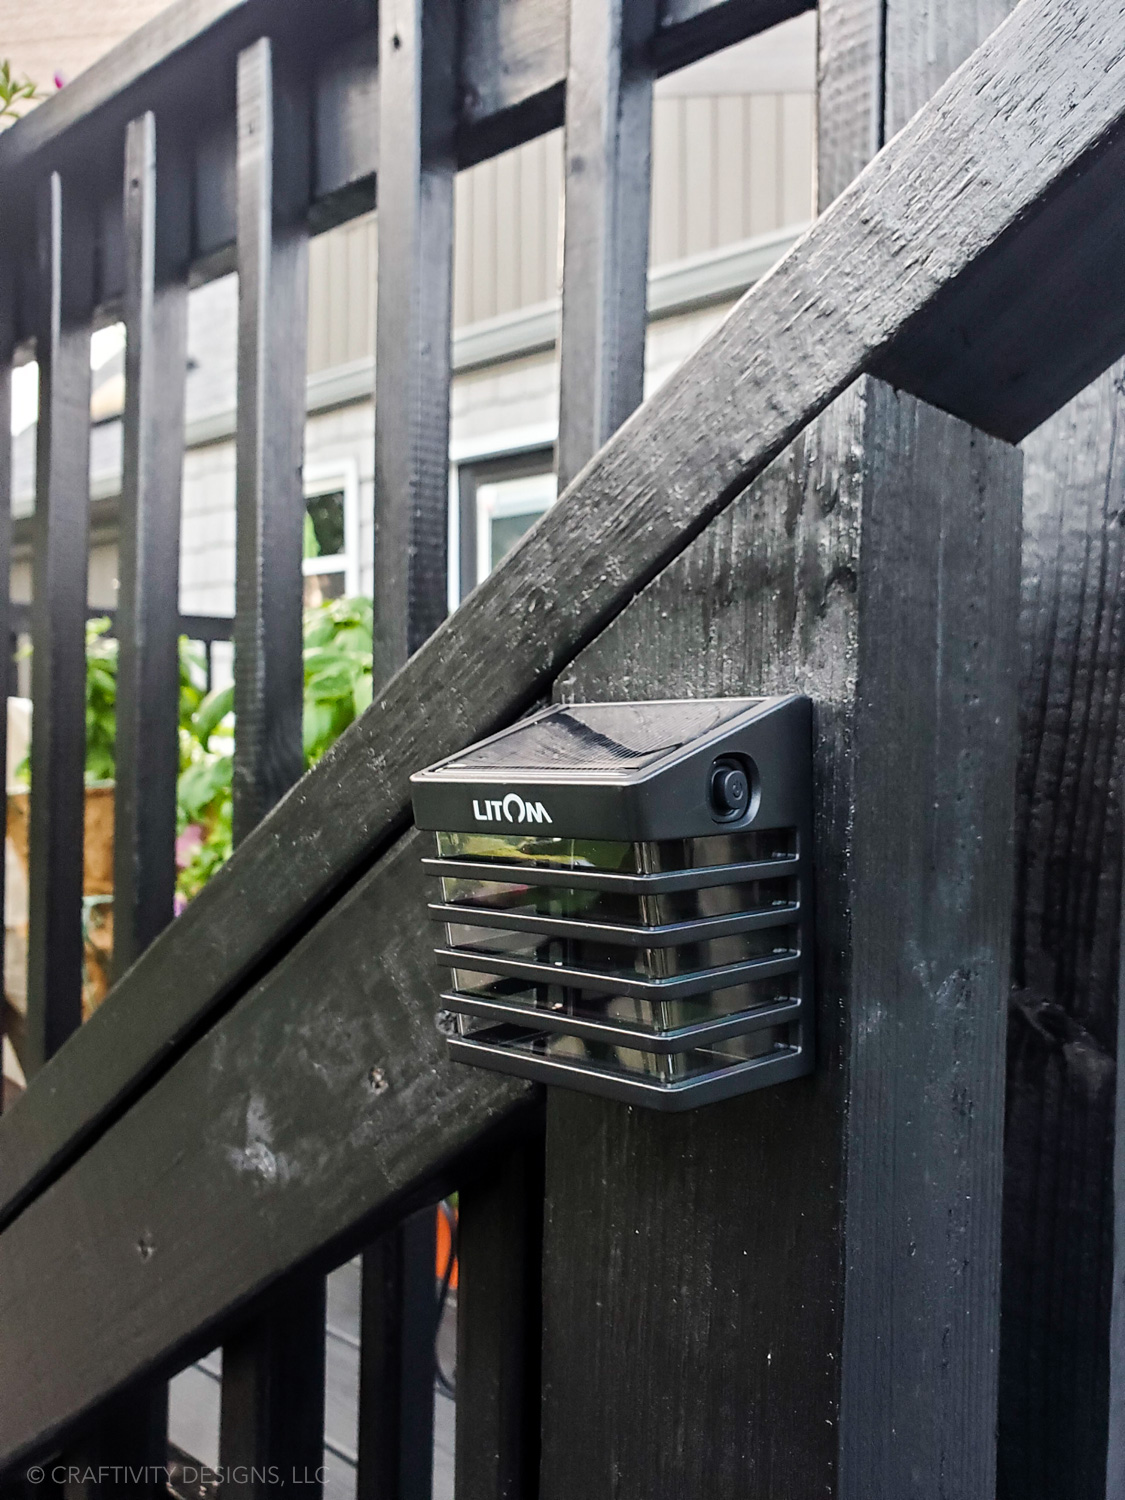 Deck rail solar light, solar lighting for stairs and decks